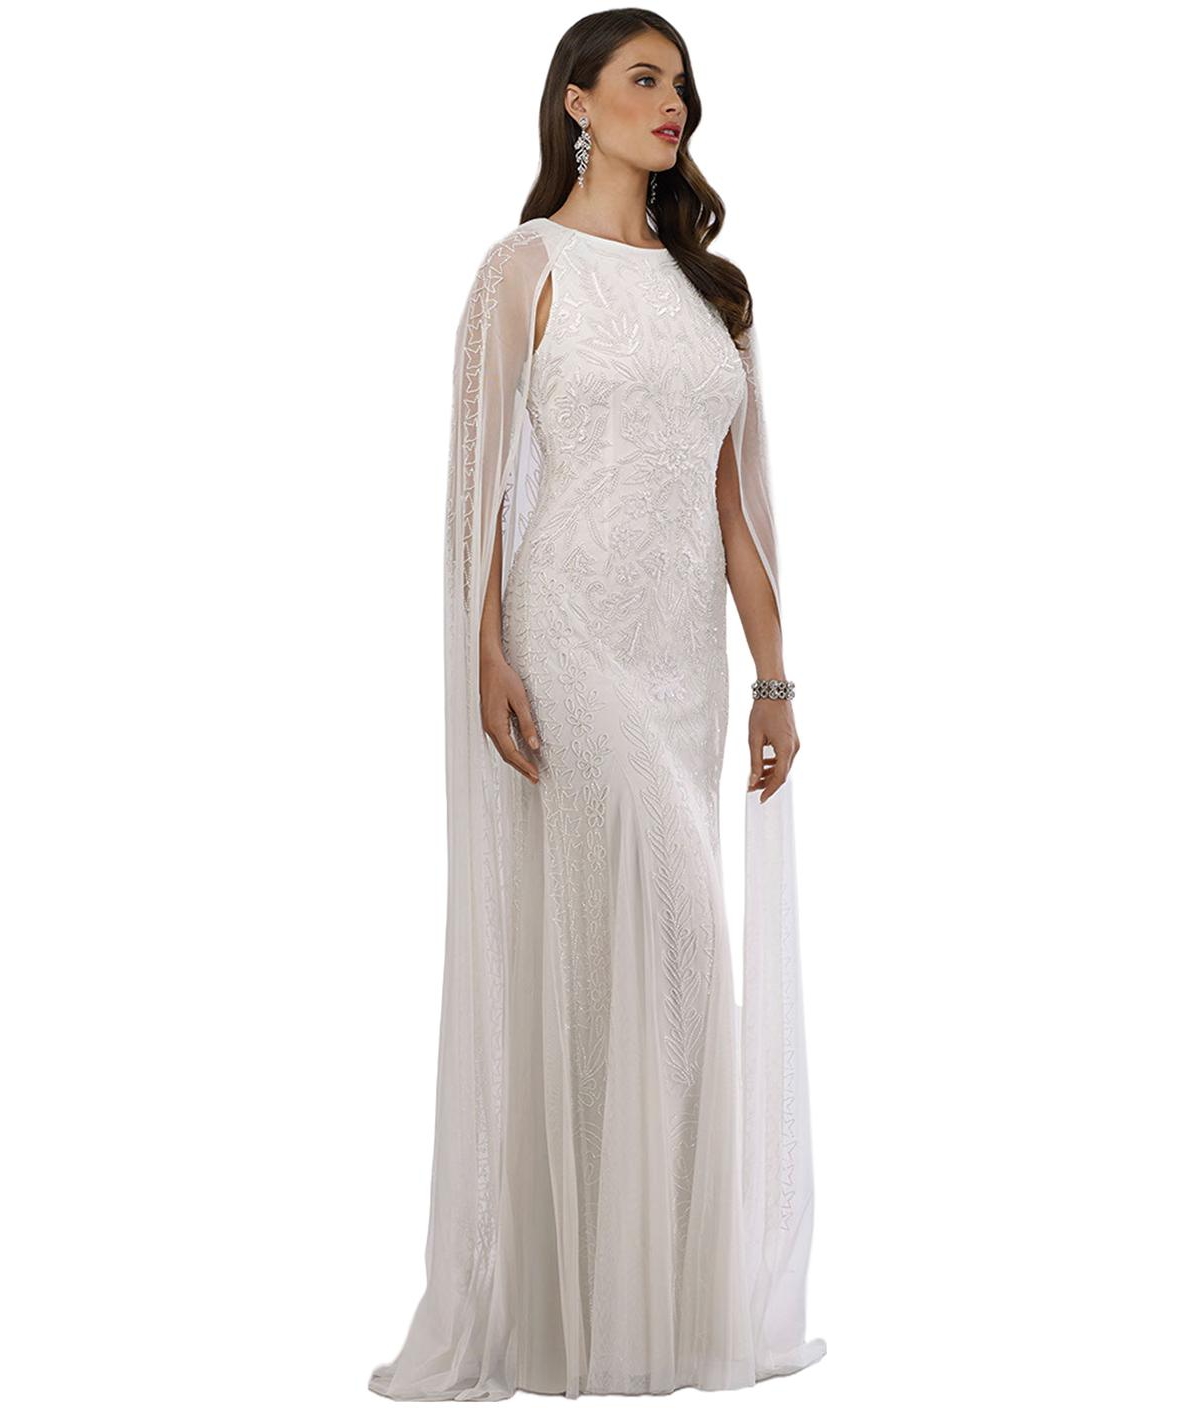 Women's Eve Beaded Cape Sleeve Wedding Dress - Ivory